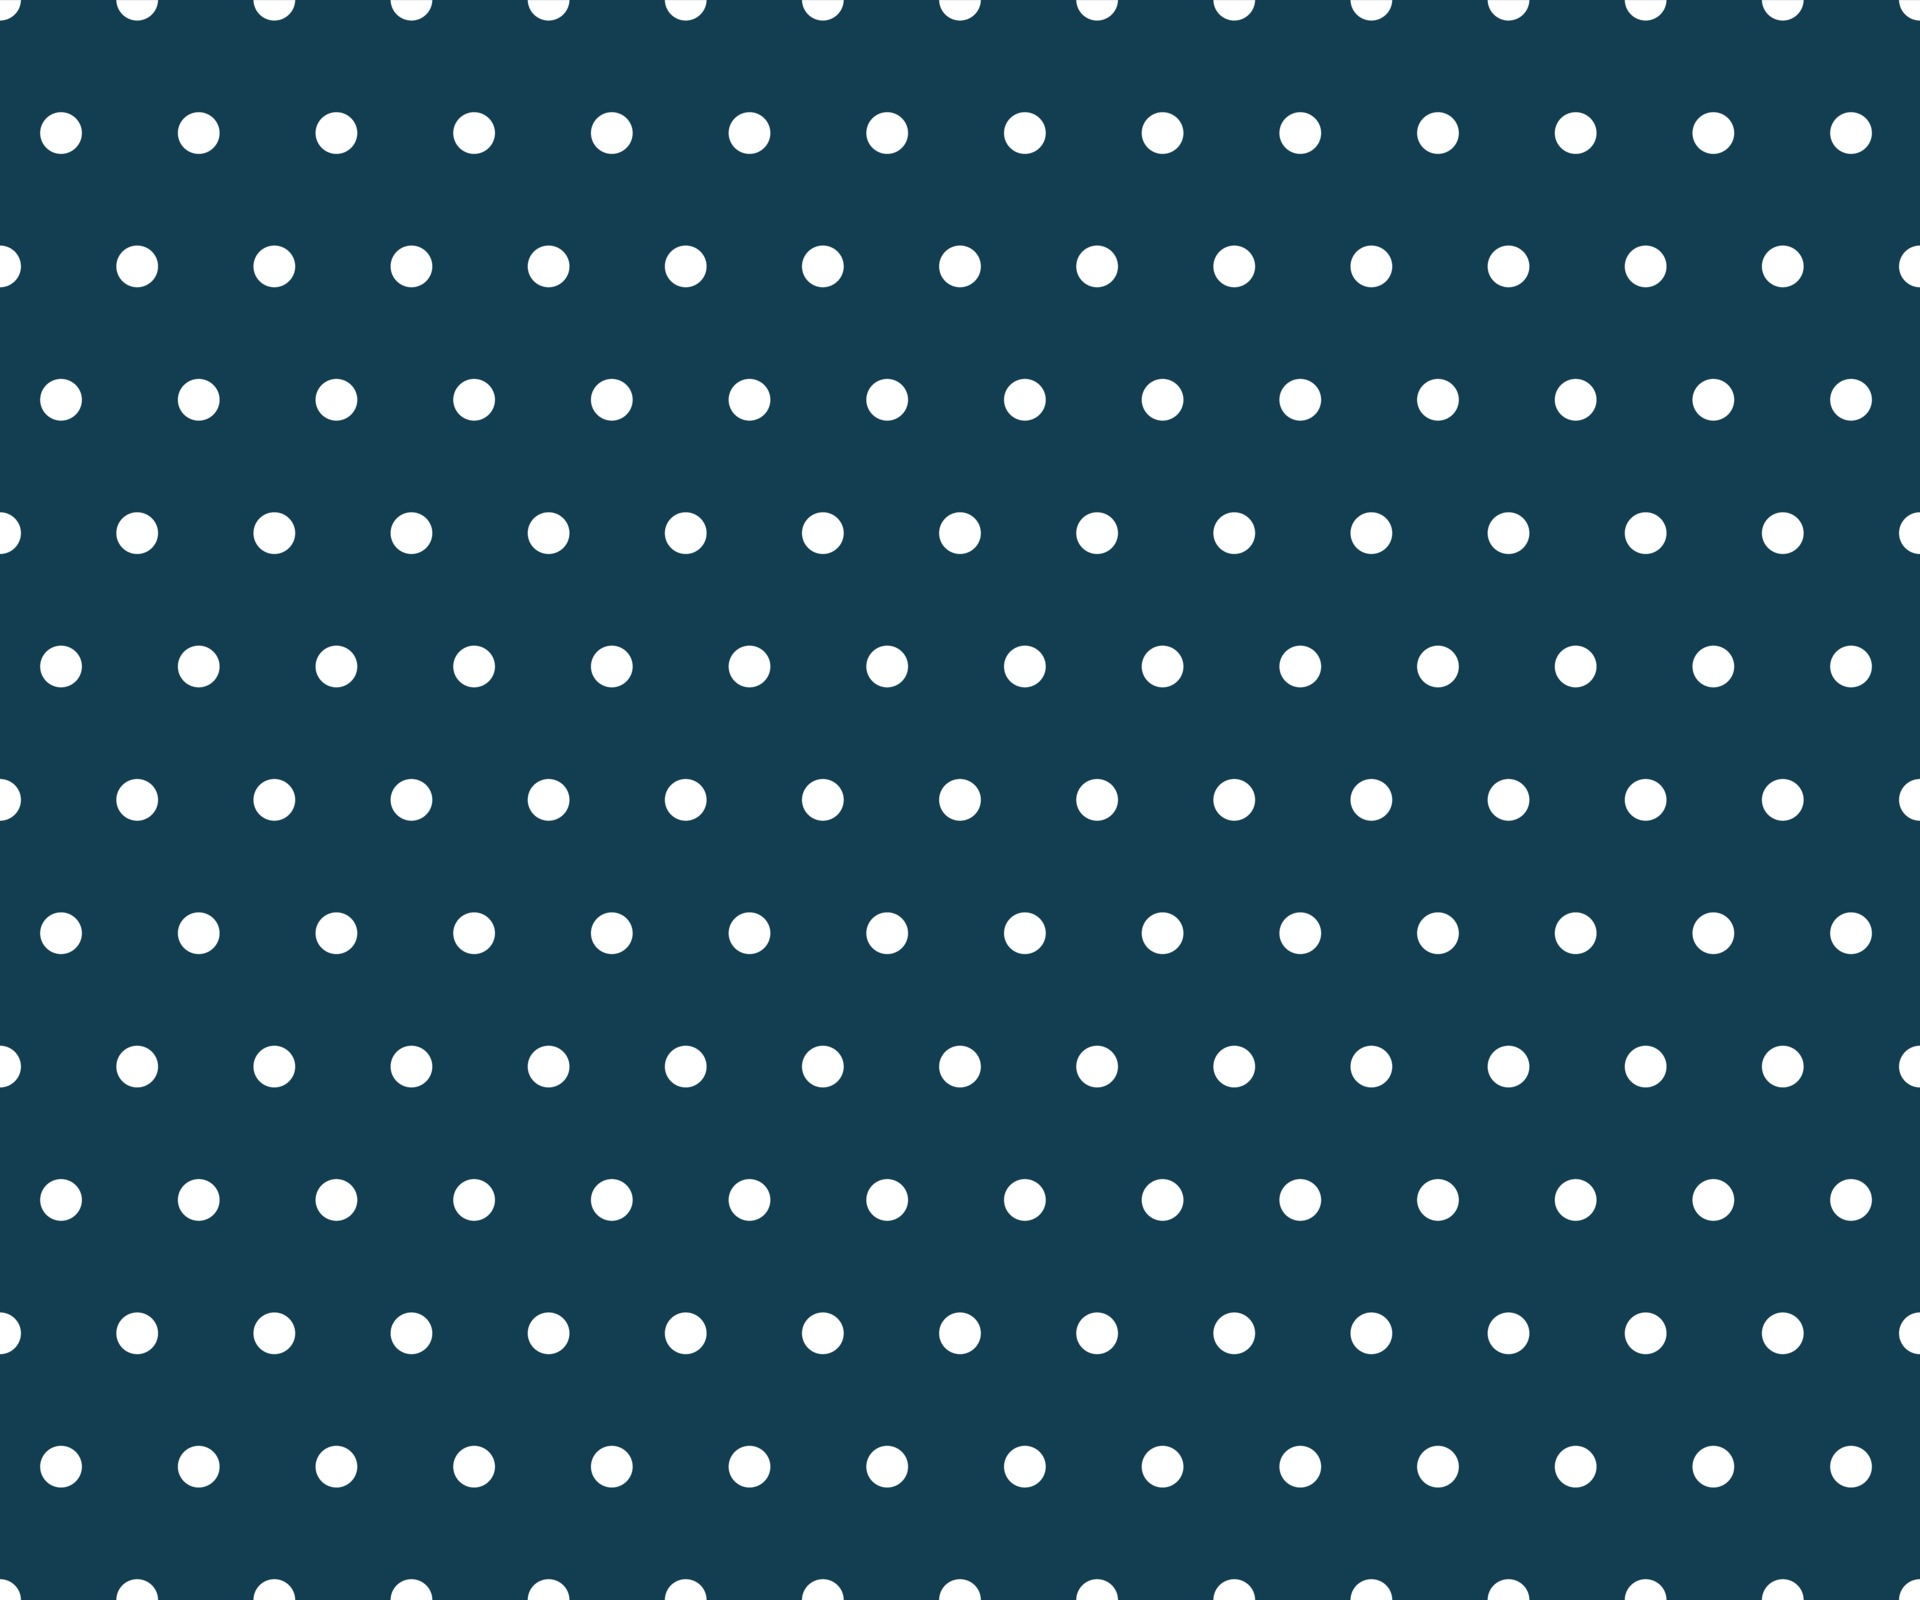 1920x1600 Polka dot pattern background vector 2378278 Vector Art